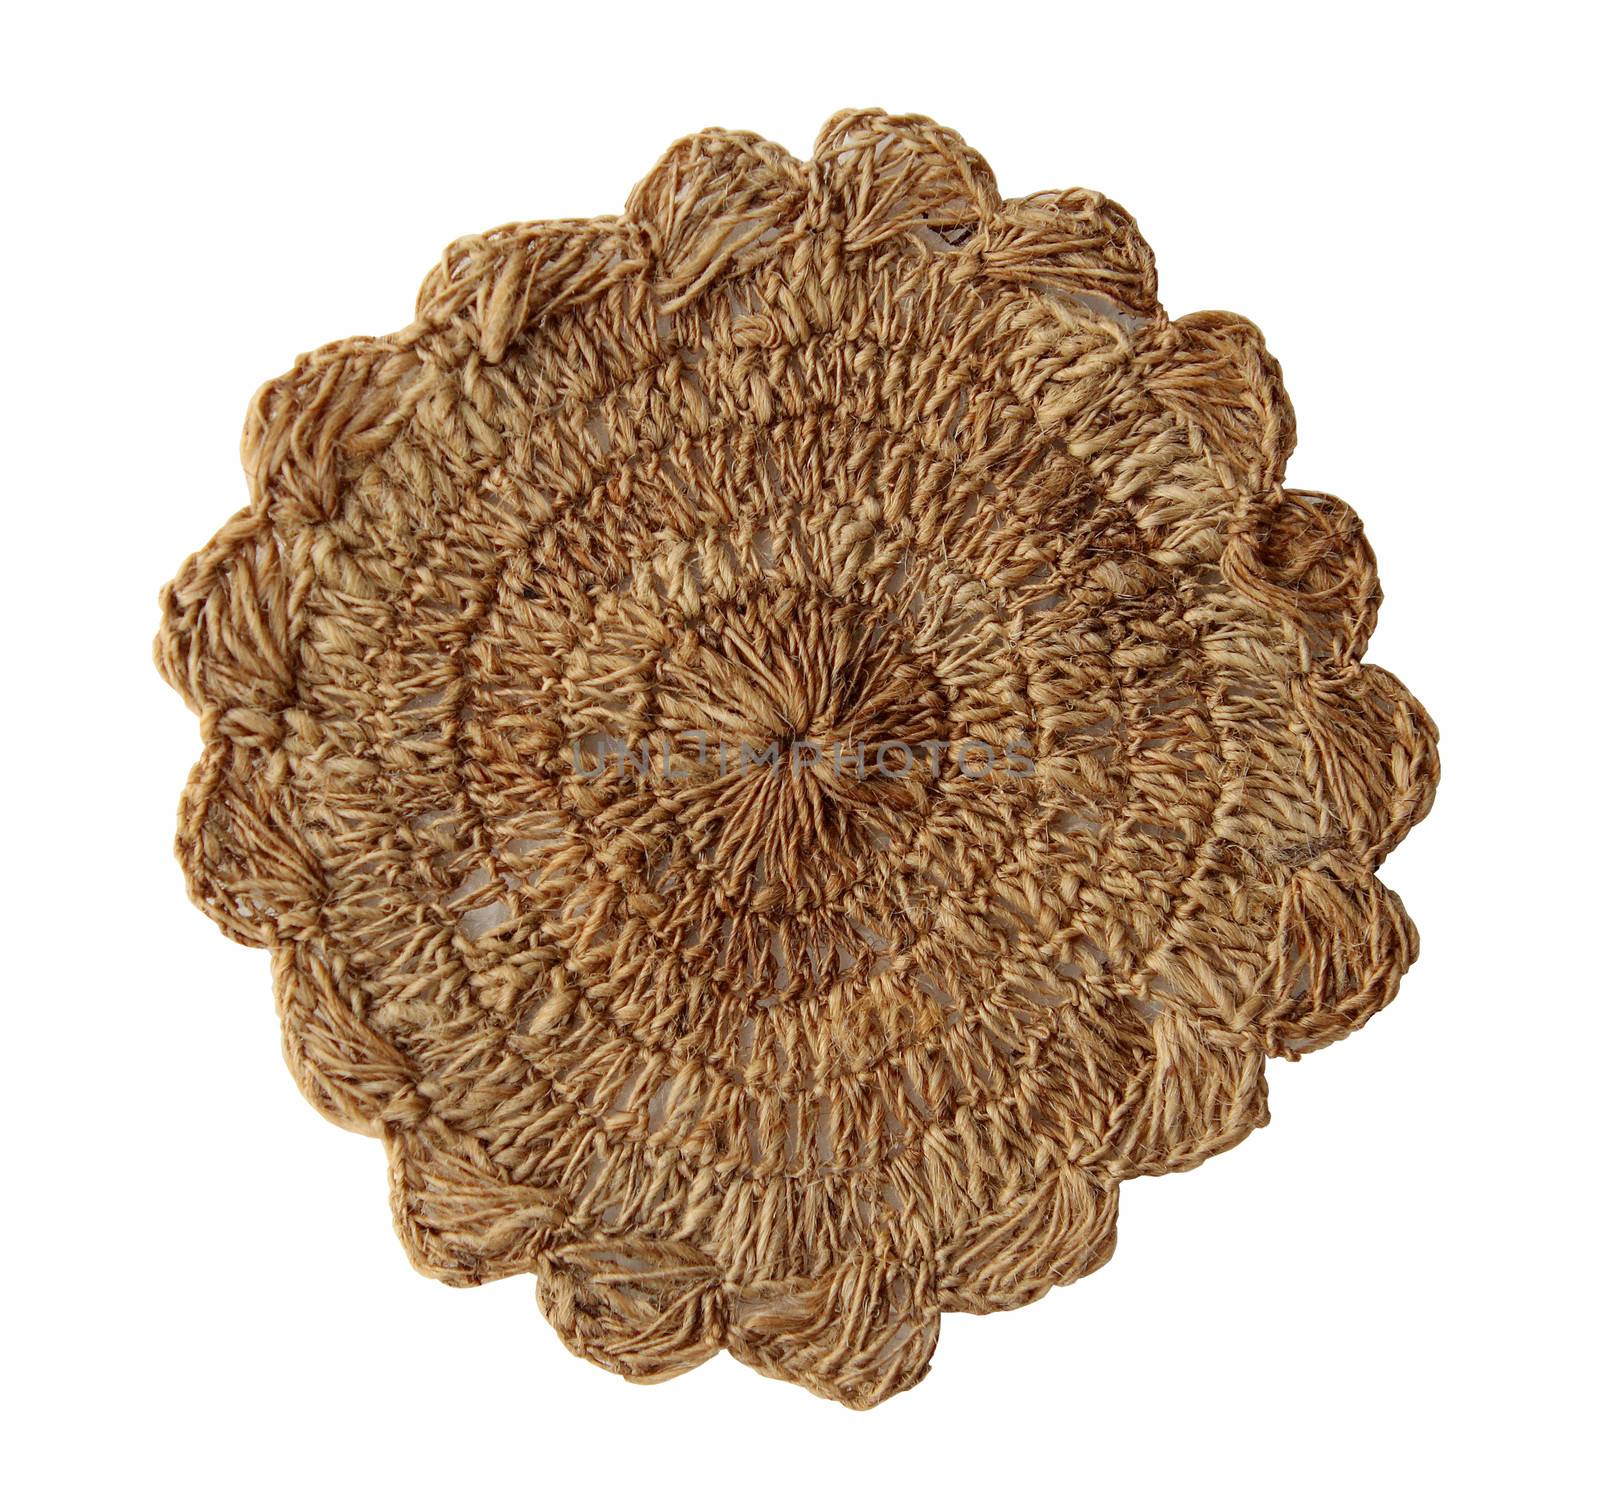 Decorative knitted cloth made of hemp handmade